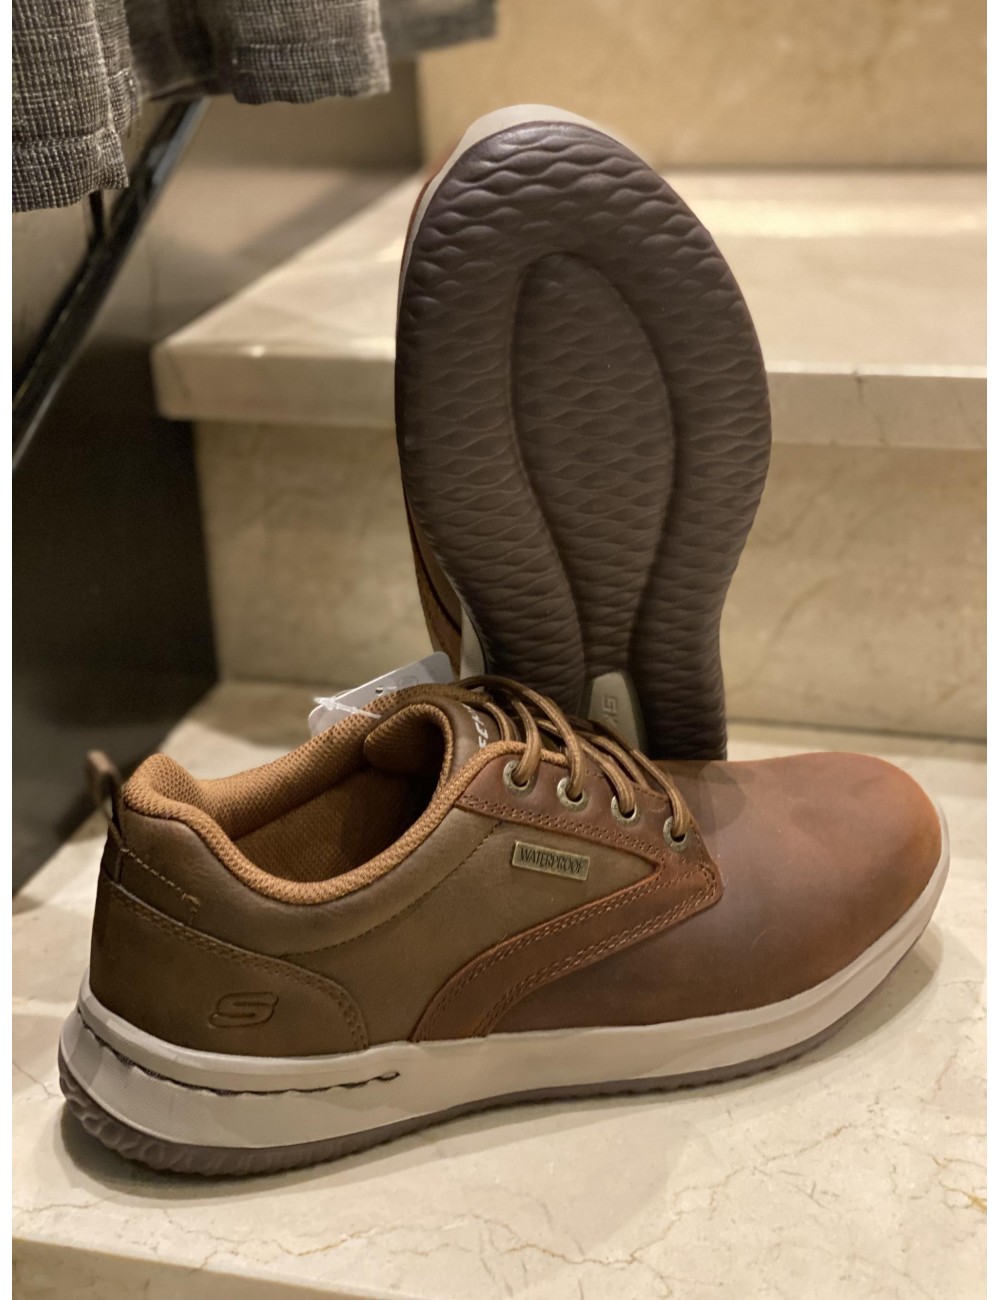 Zapato Zapato Skechers Delson - Antigo Blucher Sport Waterproof en color marrón com membrana impermeable.